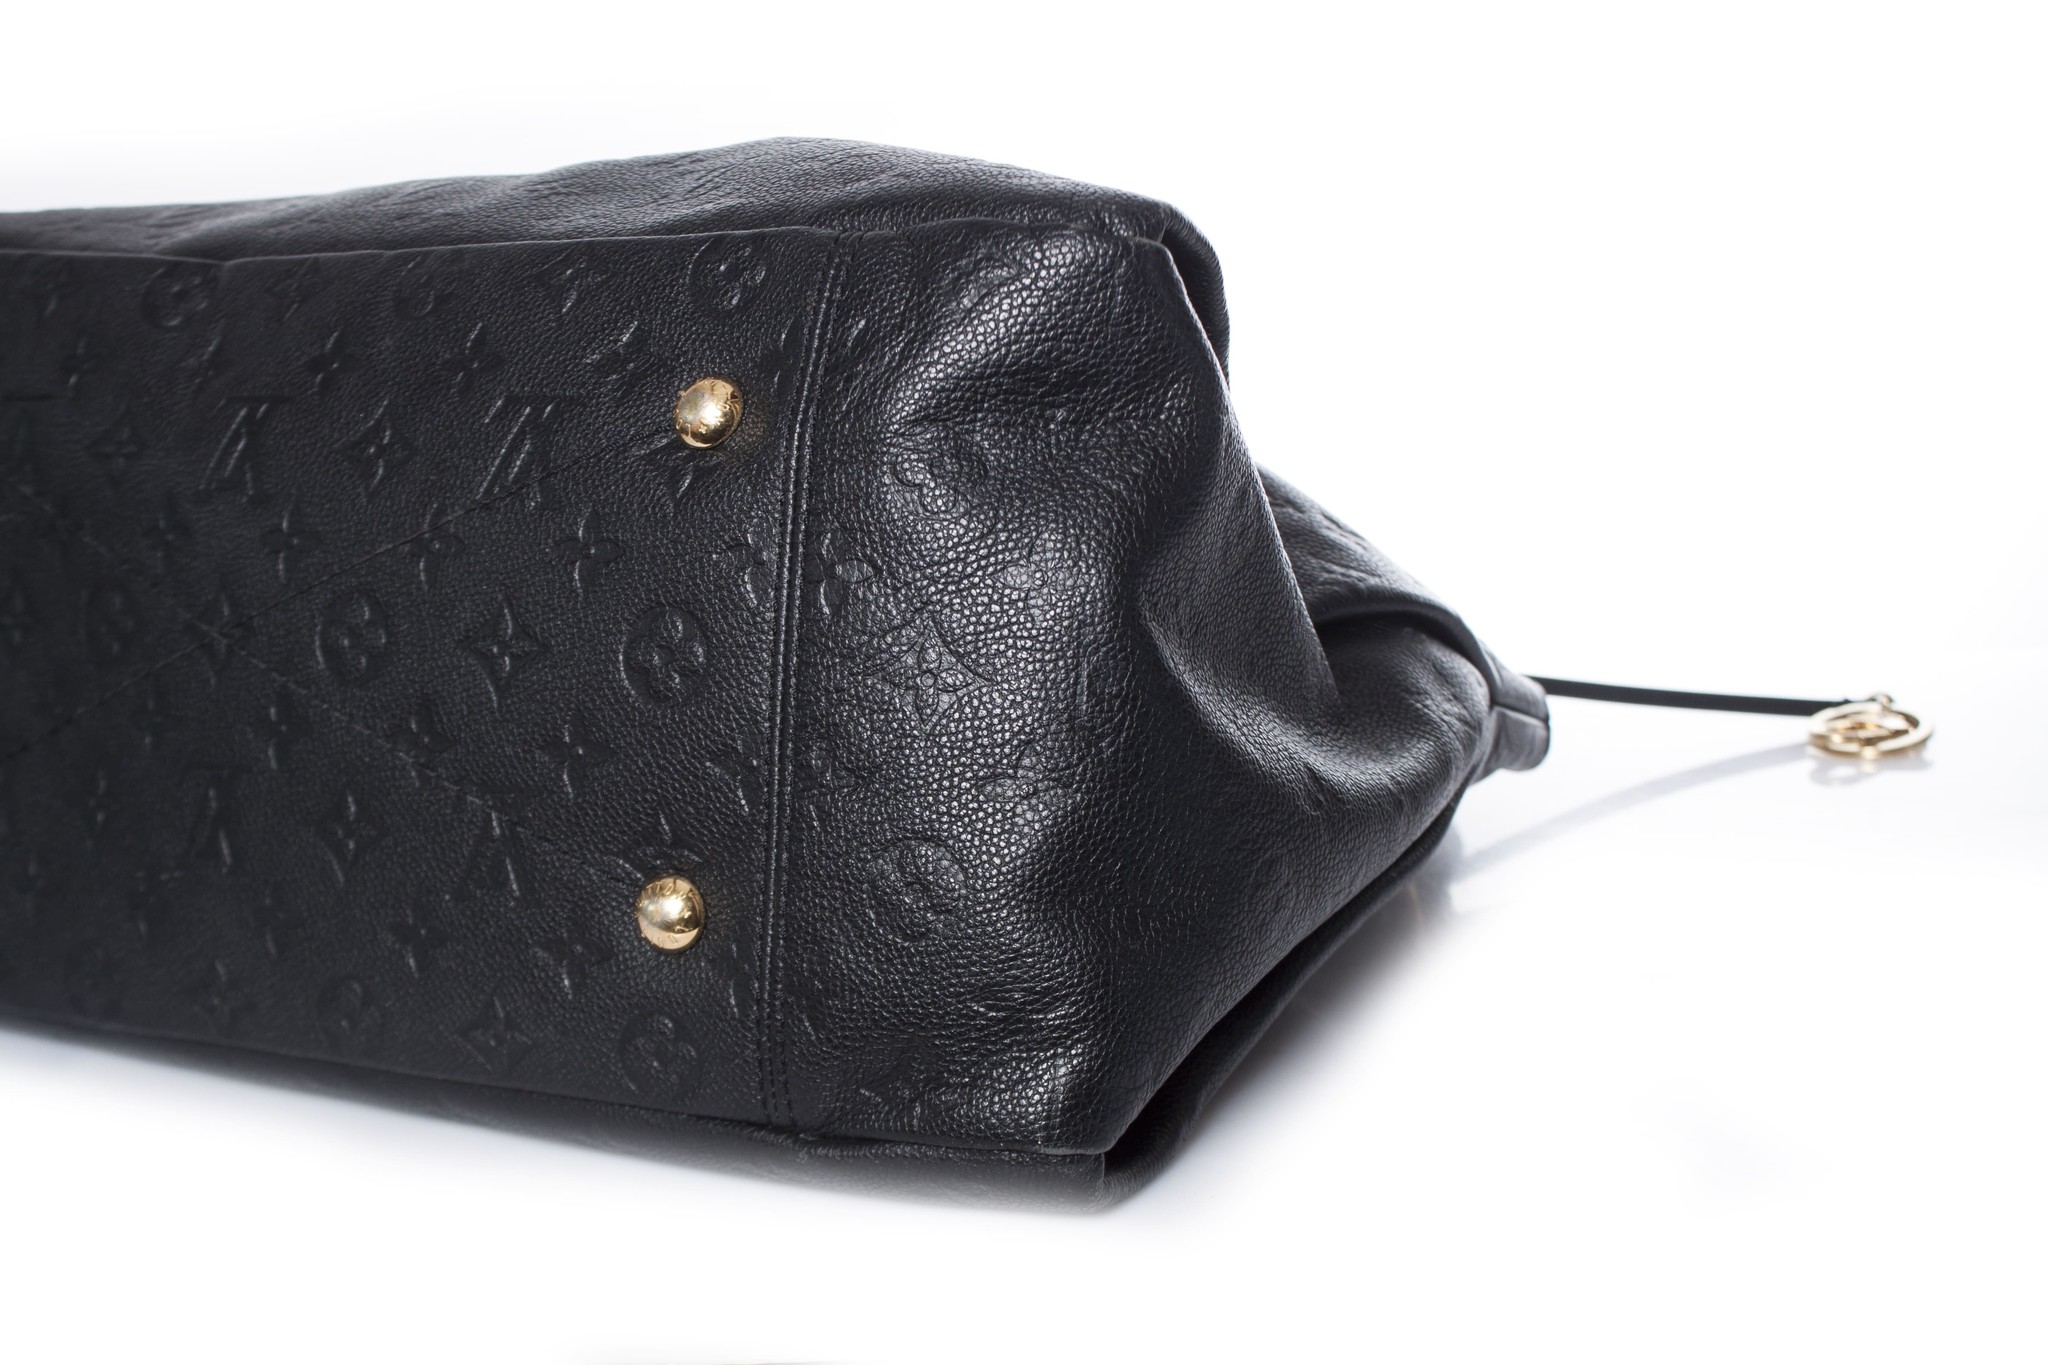 Artsy leather handbag Louis Vuitton Black in Leather - 36266492